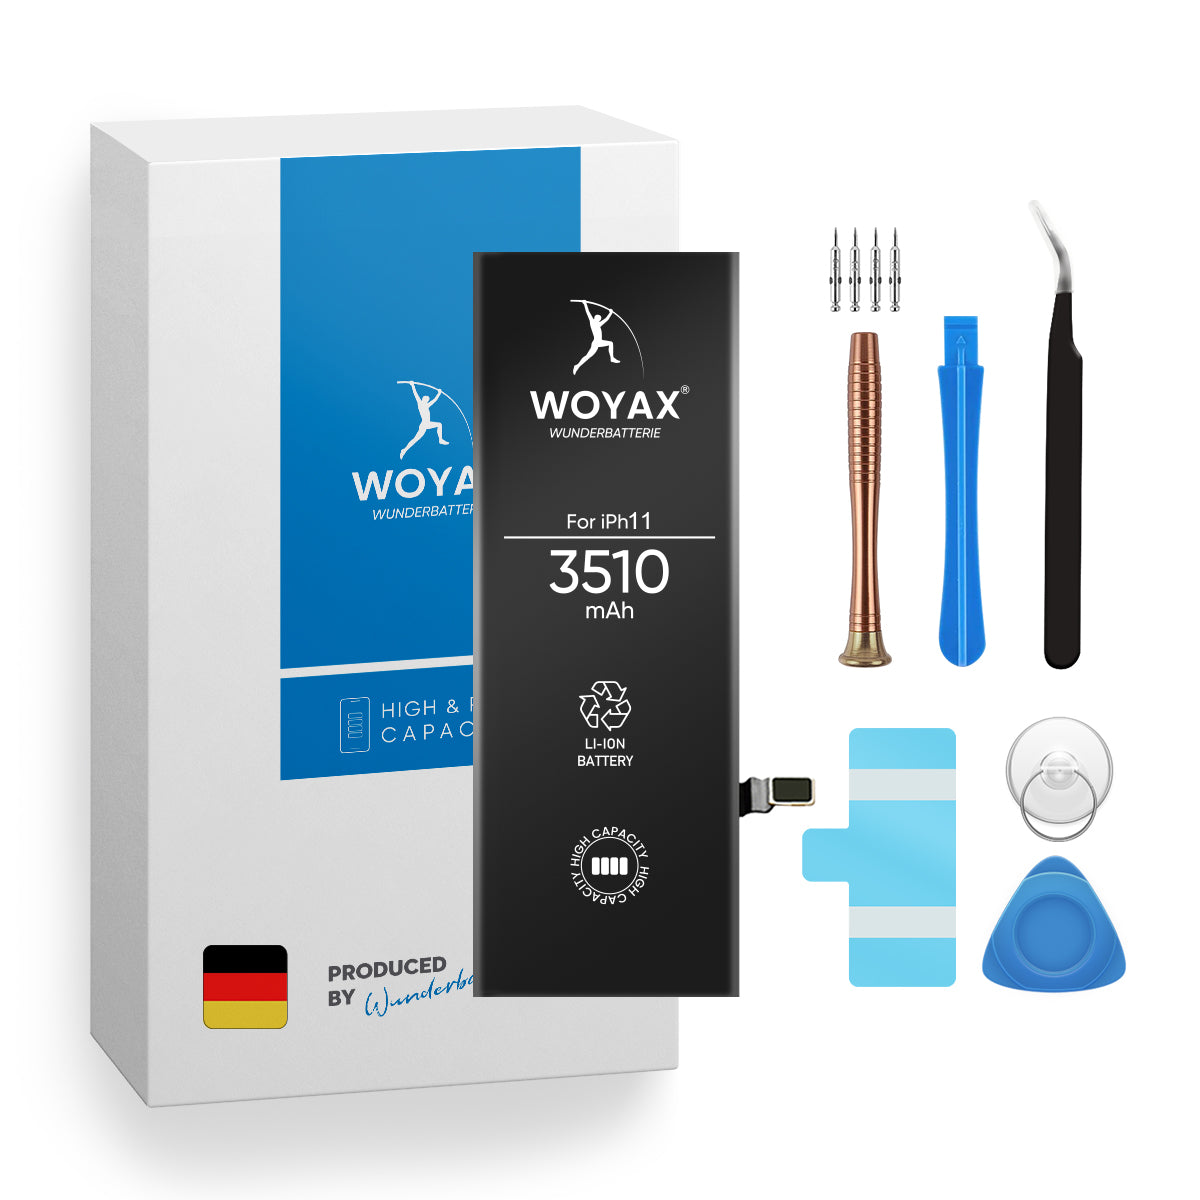 WOYAX Wunderbatterie Akku für iPhone Volt, Li-Ionen Ersatzakku 3.83 3510mAh Kapazität 11 Hohe Handy-Akku